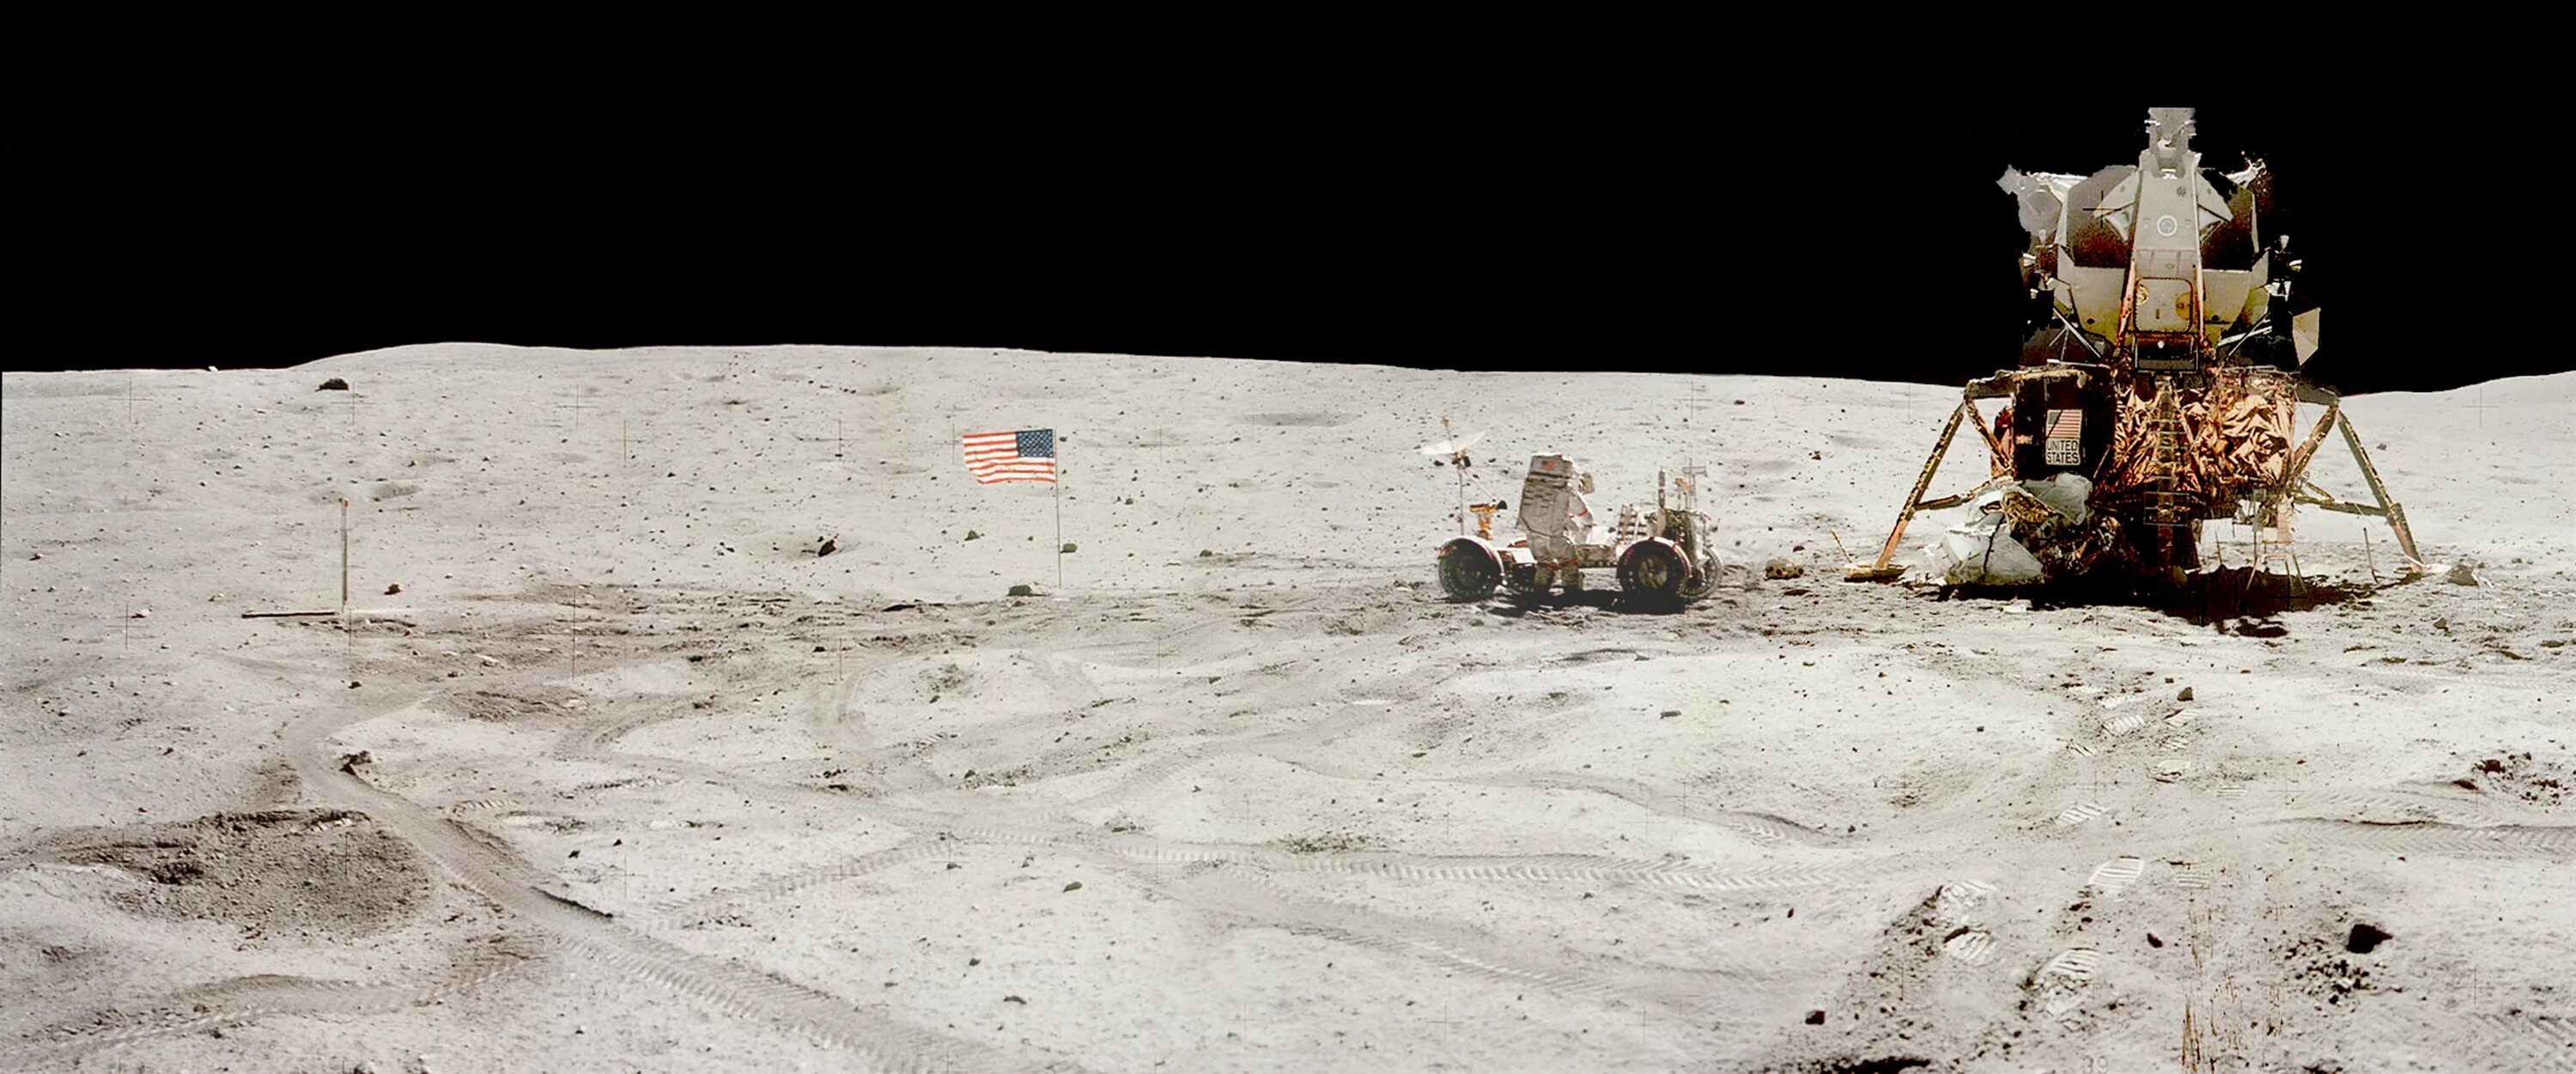 Аполлон 16 на Луне. Аполлон 16 фото на Луне. «Аполлон-16» совершил посадку на поверхность Луны. Аполлон 12 на Луне. Стоя на поверхности луны